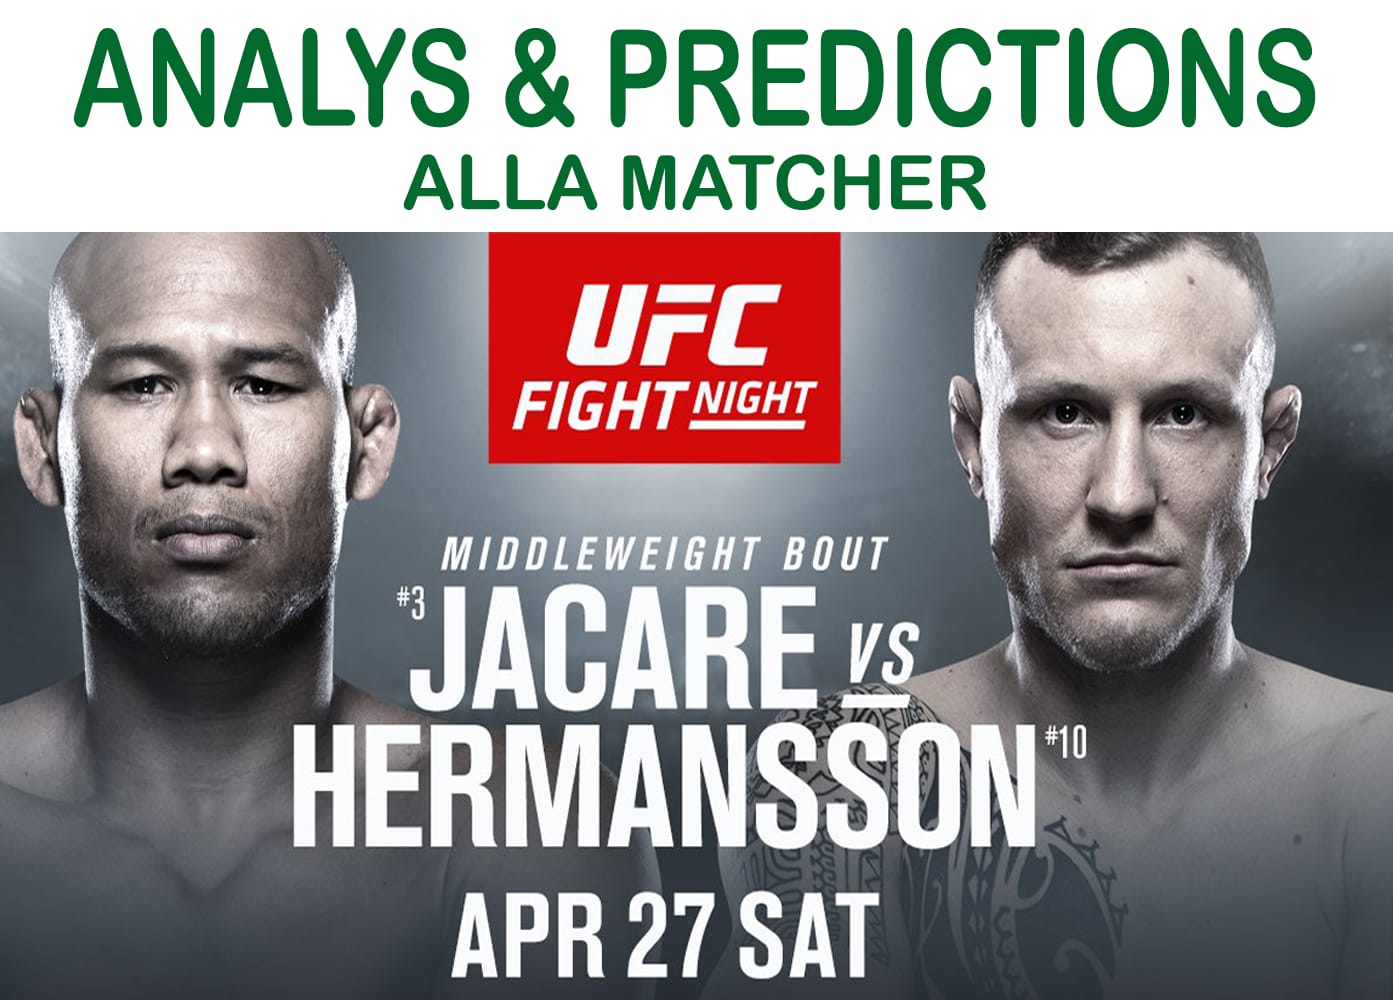 UFC Jack Hermansson vs Jacare spel genomgång